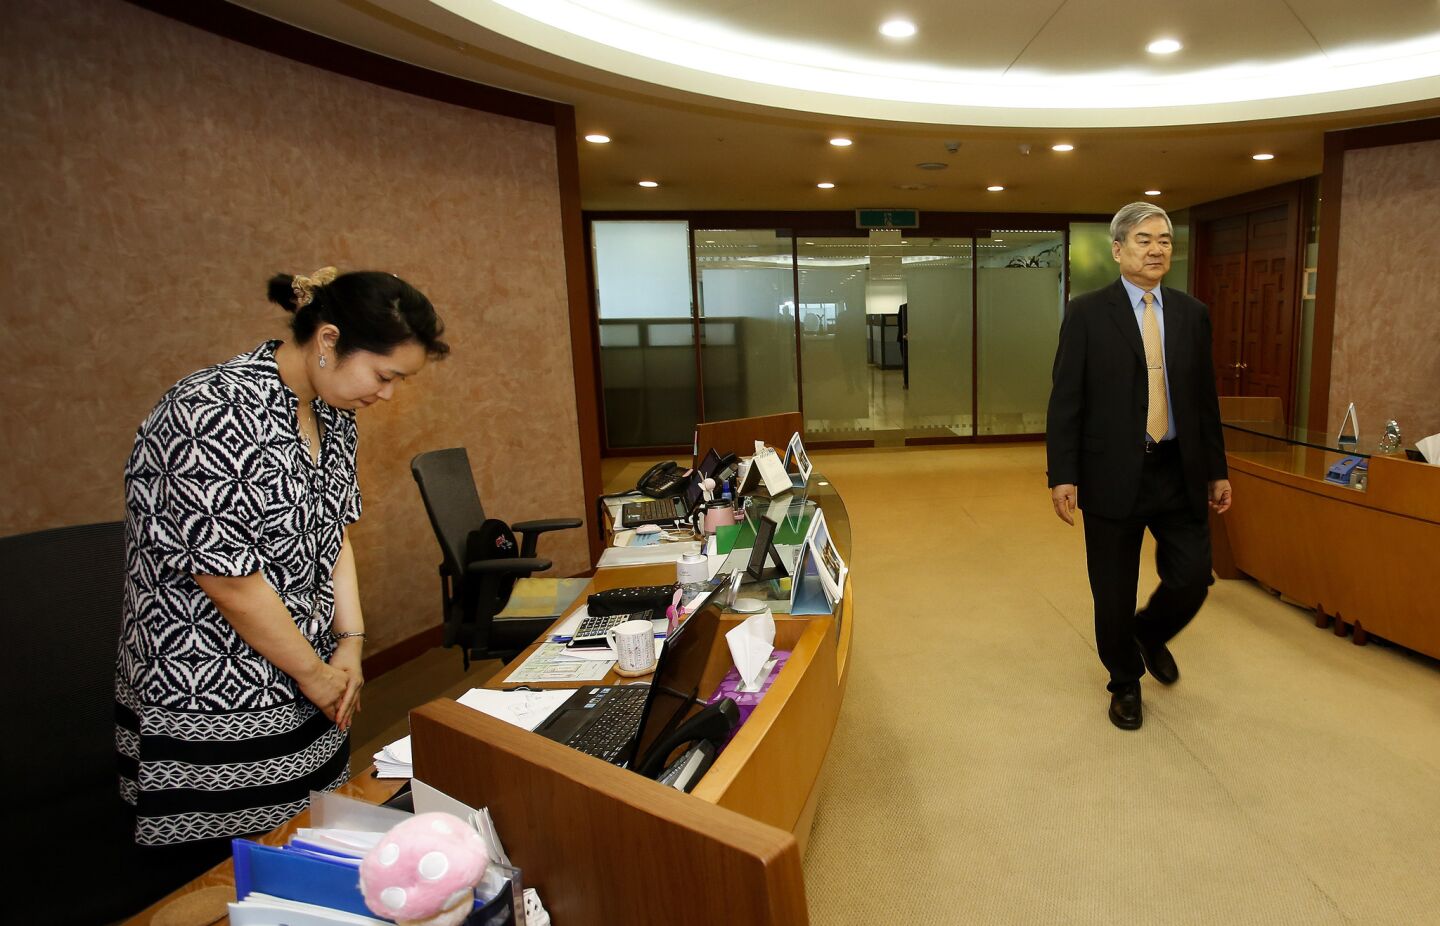 A secretary bows her head as Yang Ho Cho, Chairman of Korean Air, makes his way into his office at Korean Air's headquarters in Seoul, Korea.